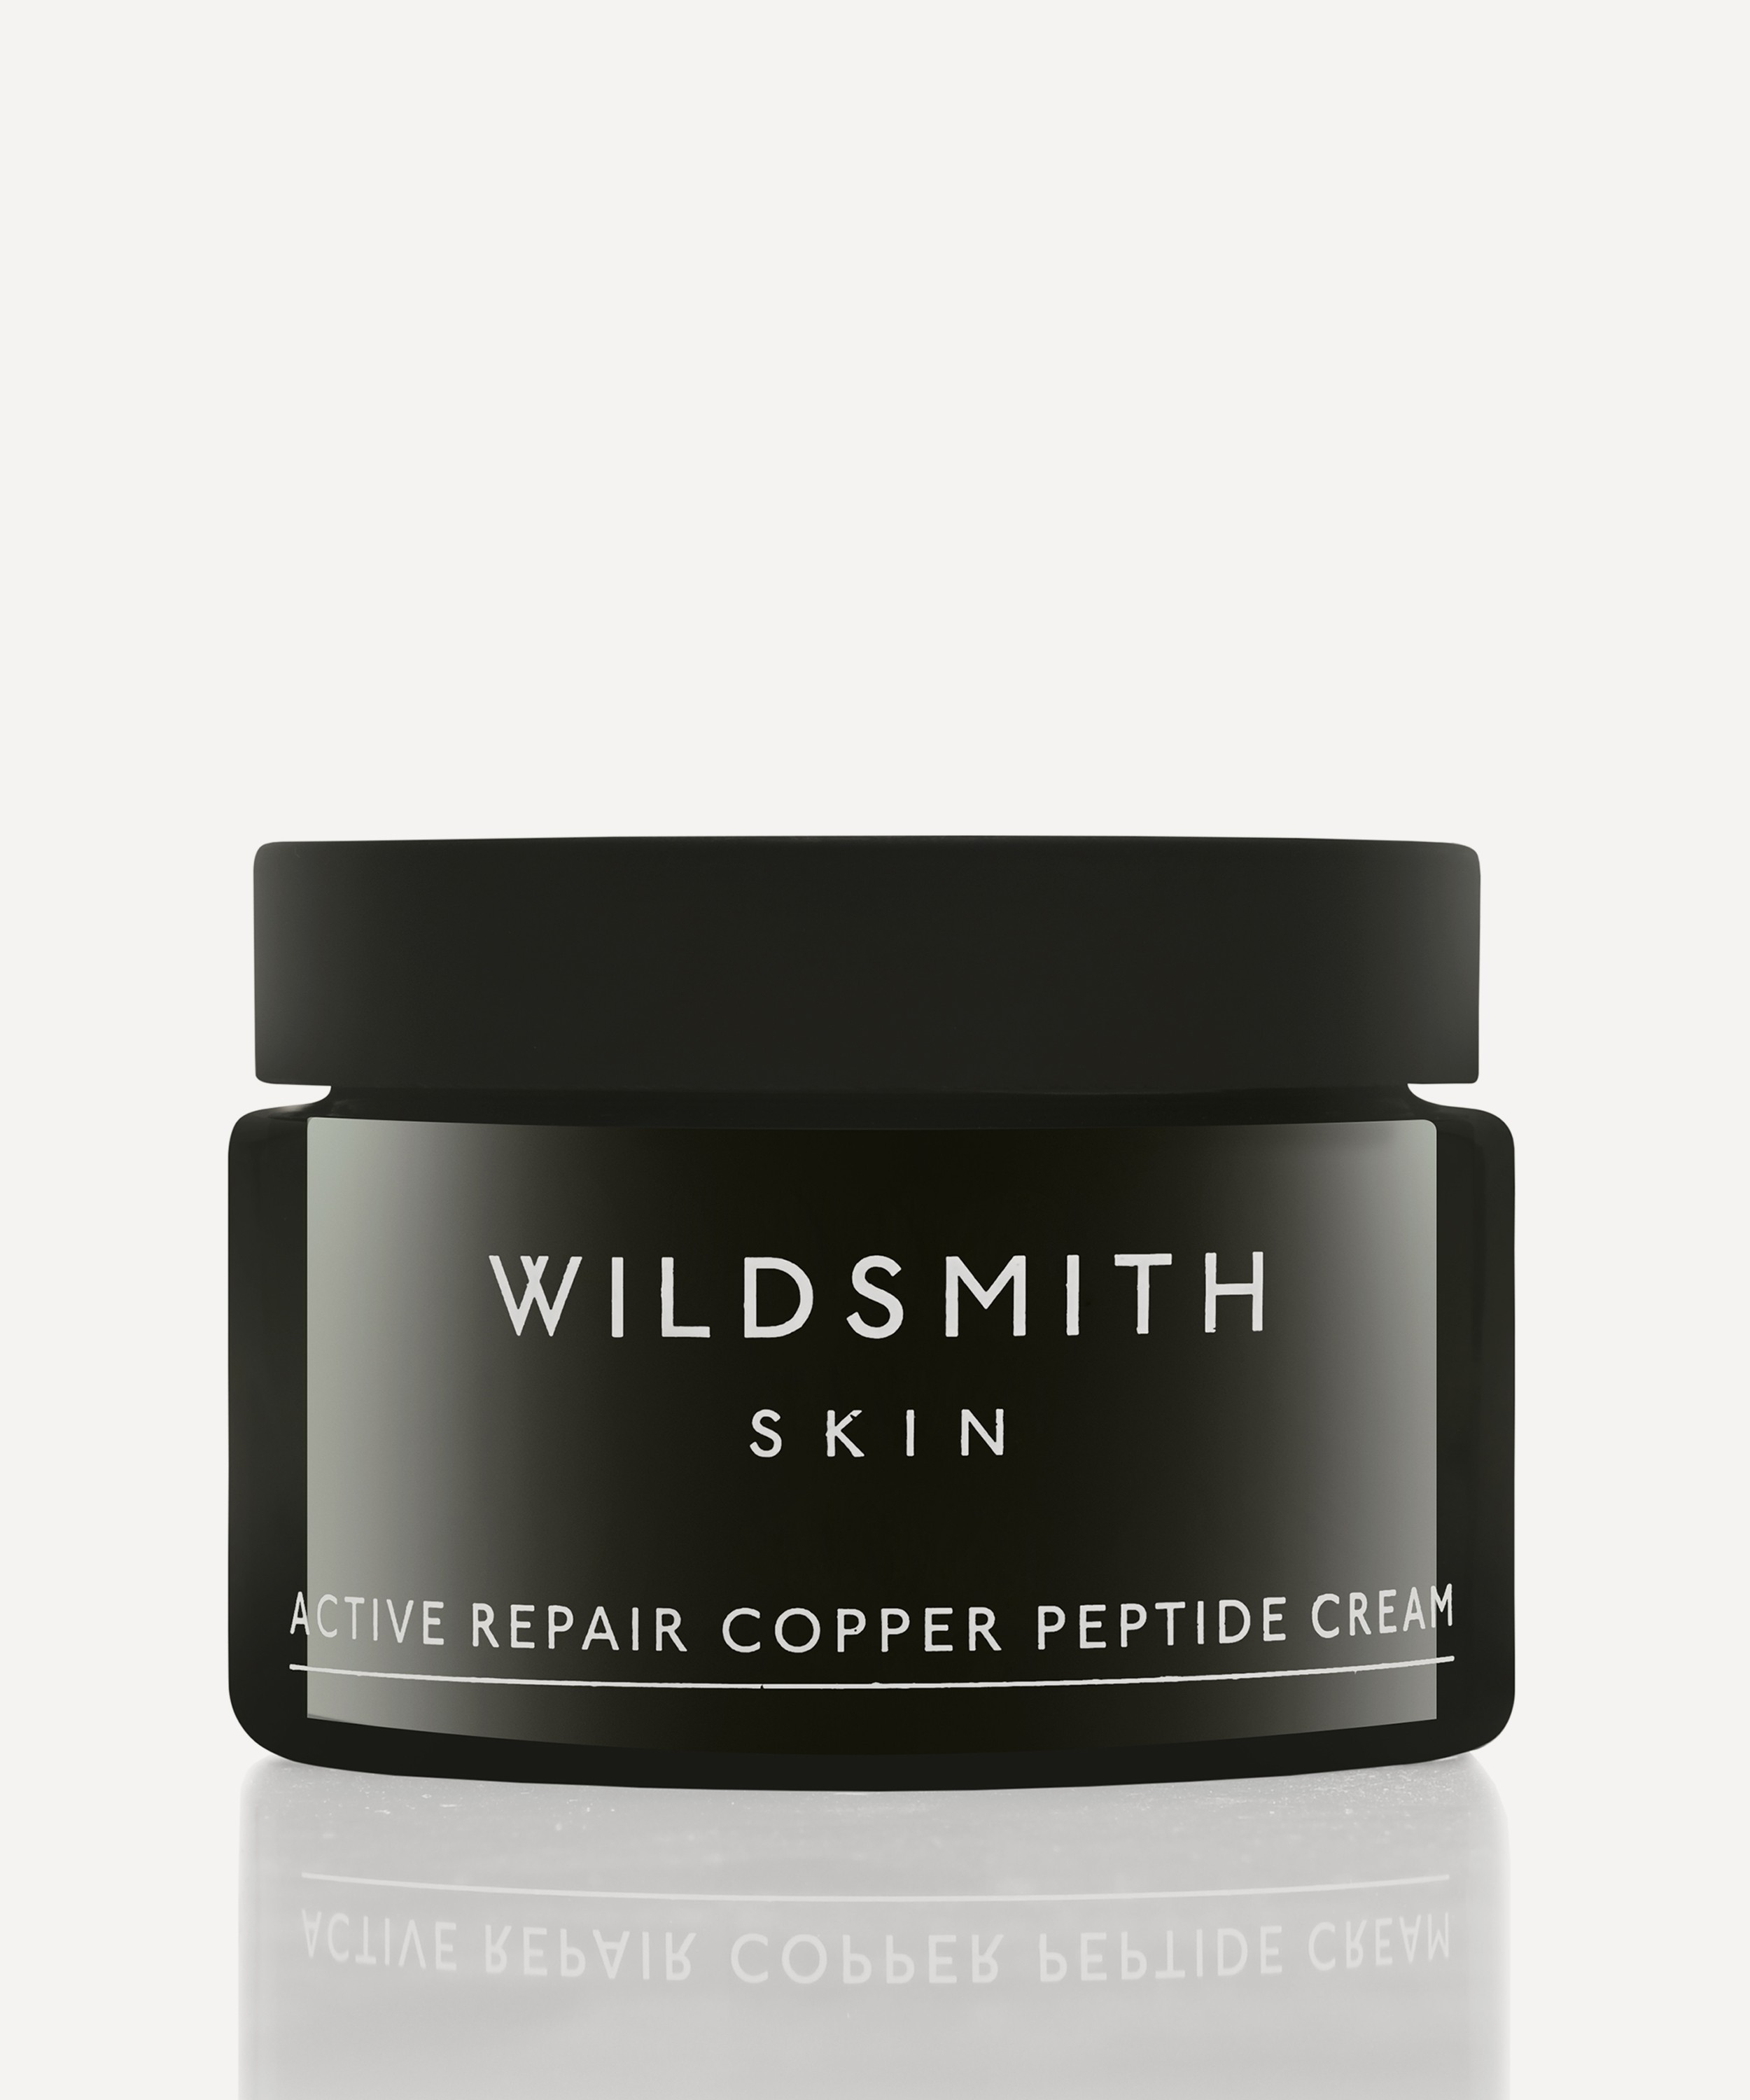 Wildsmith - Active Repair Copper Peptide Cream 50ml